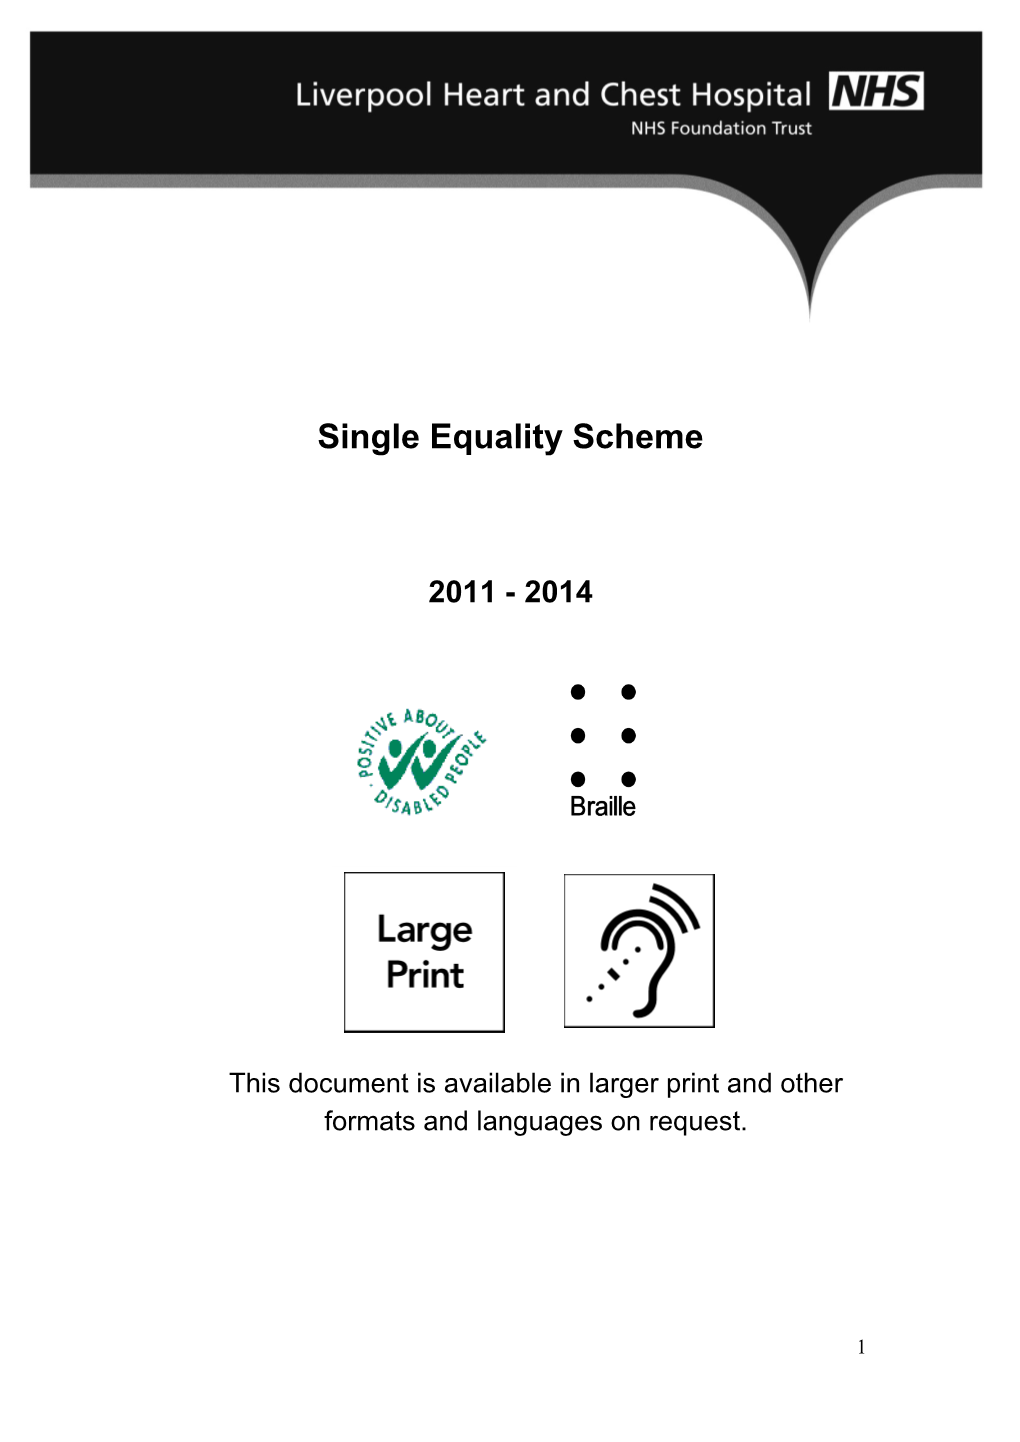 Single Equality Scheme